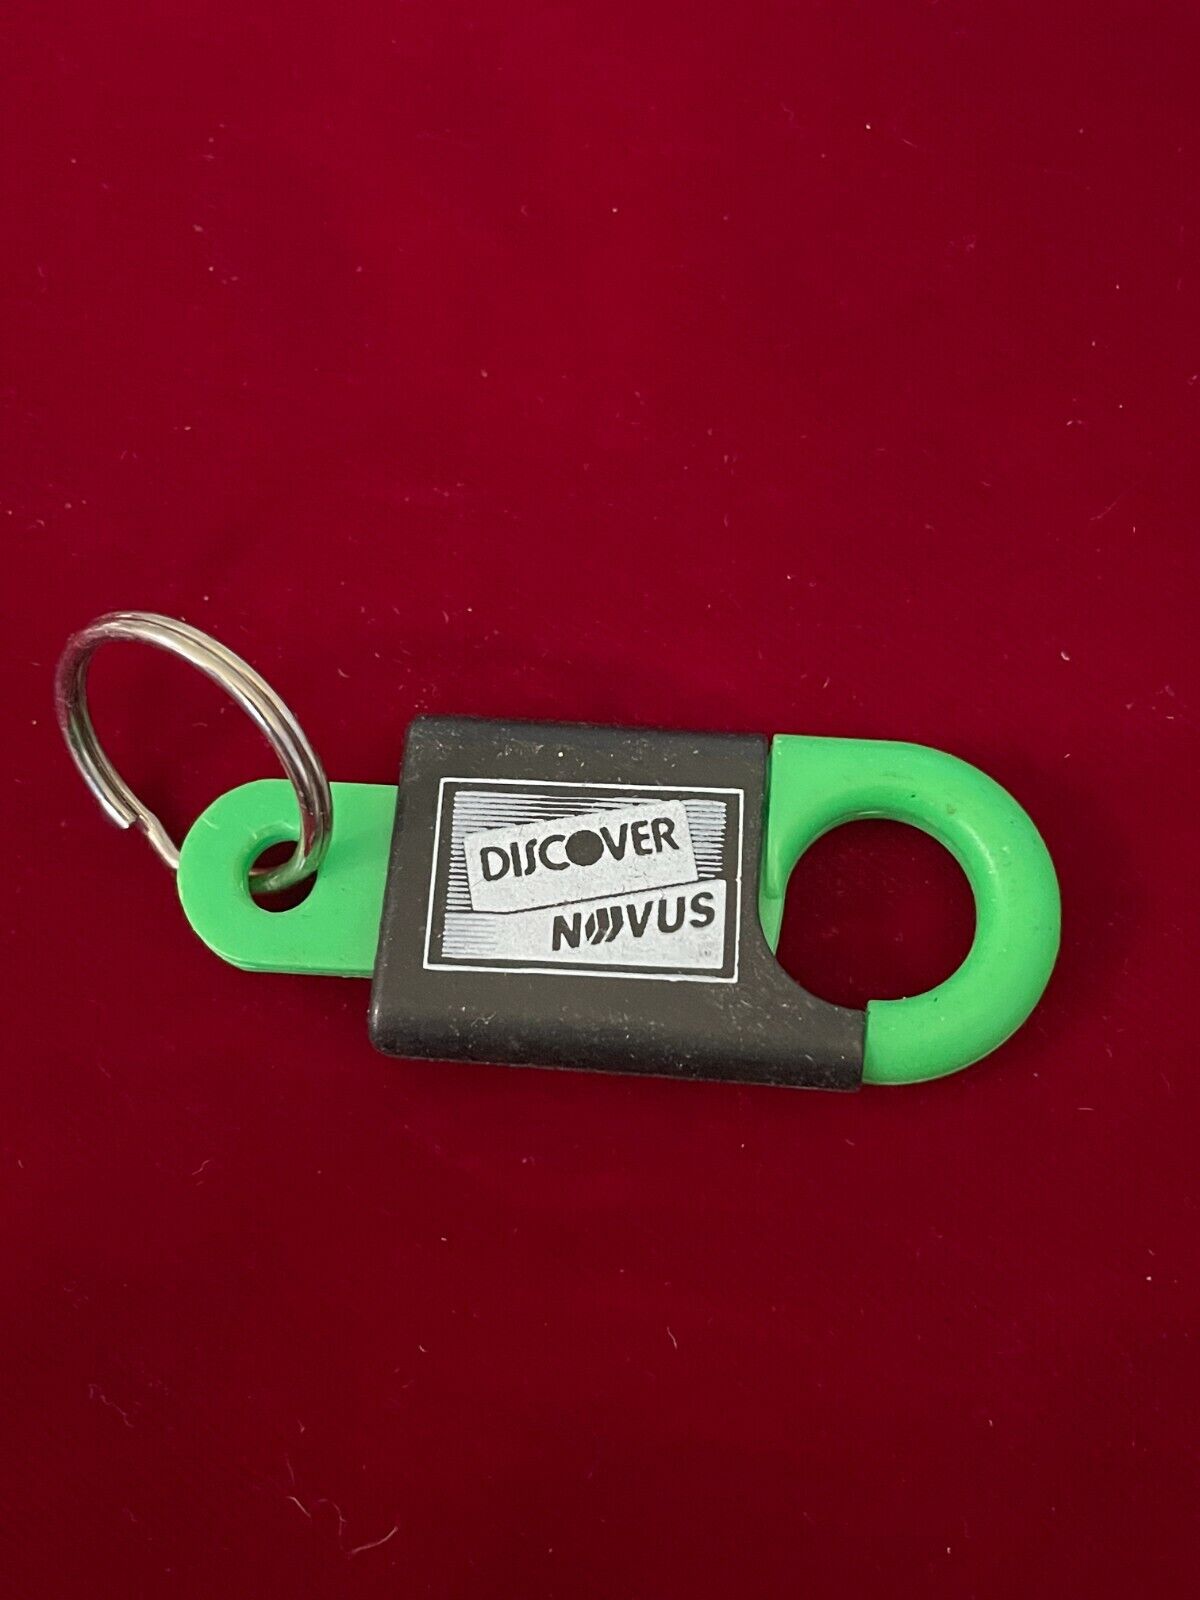 Novus Discover Green & Black Plastic Advertising Keychain Push Release Belt Hook